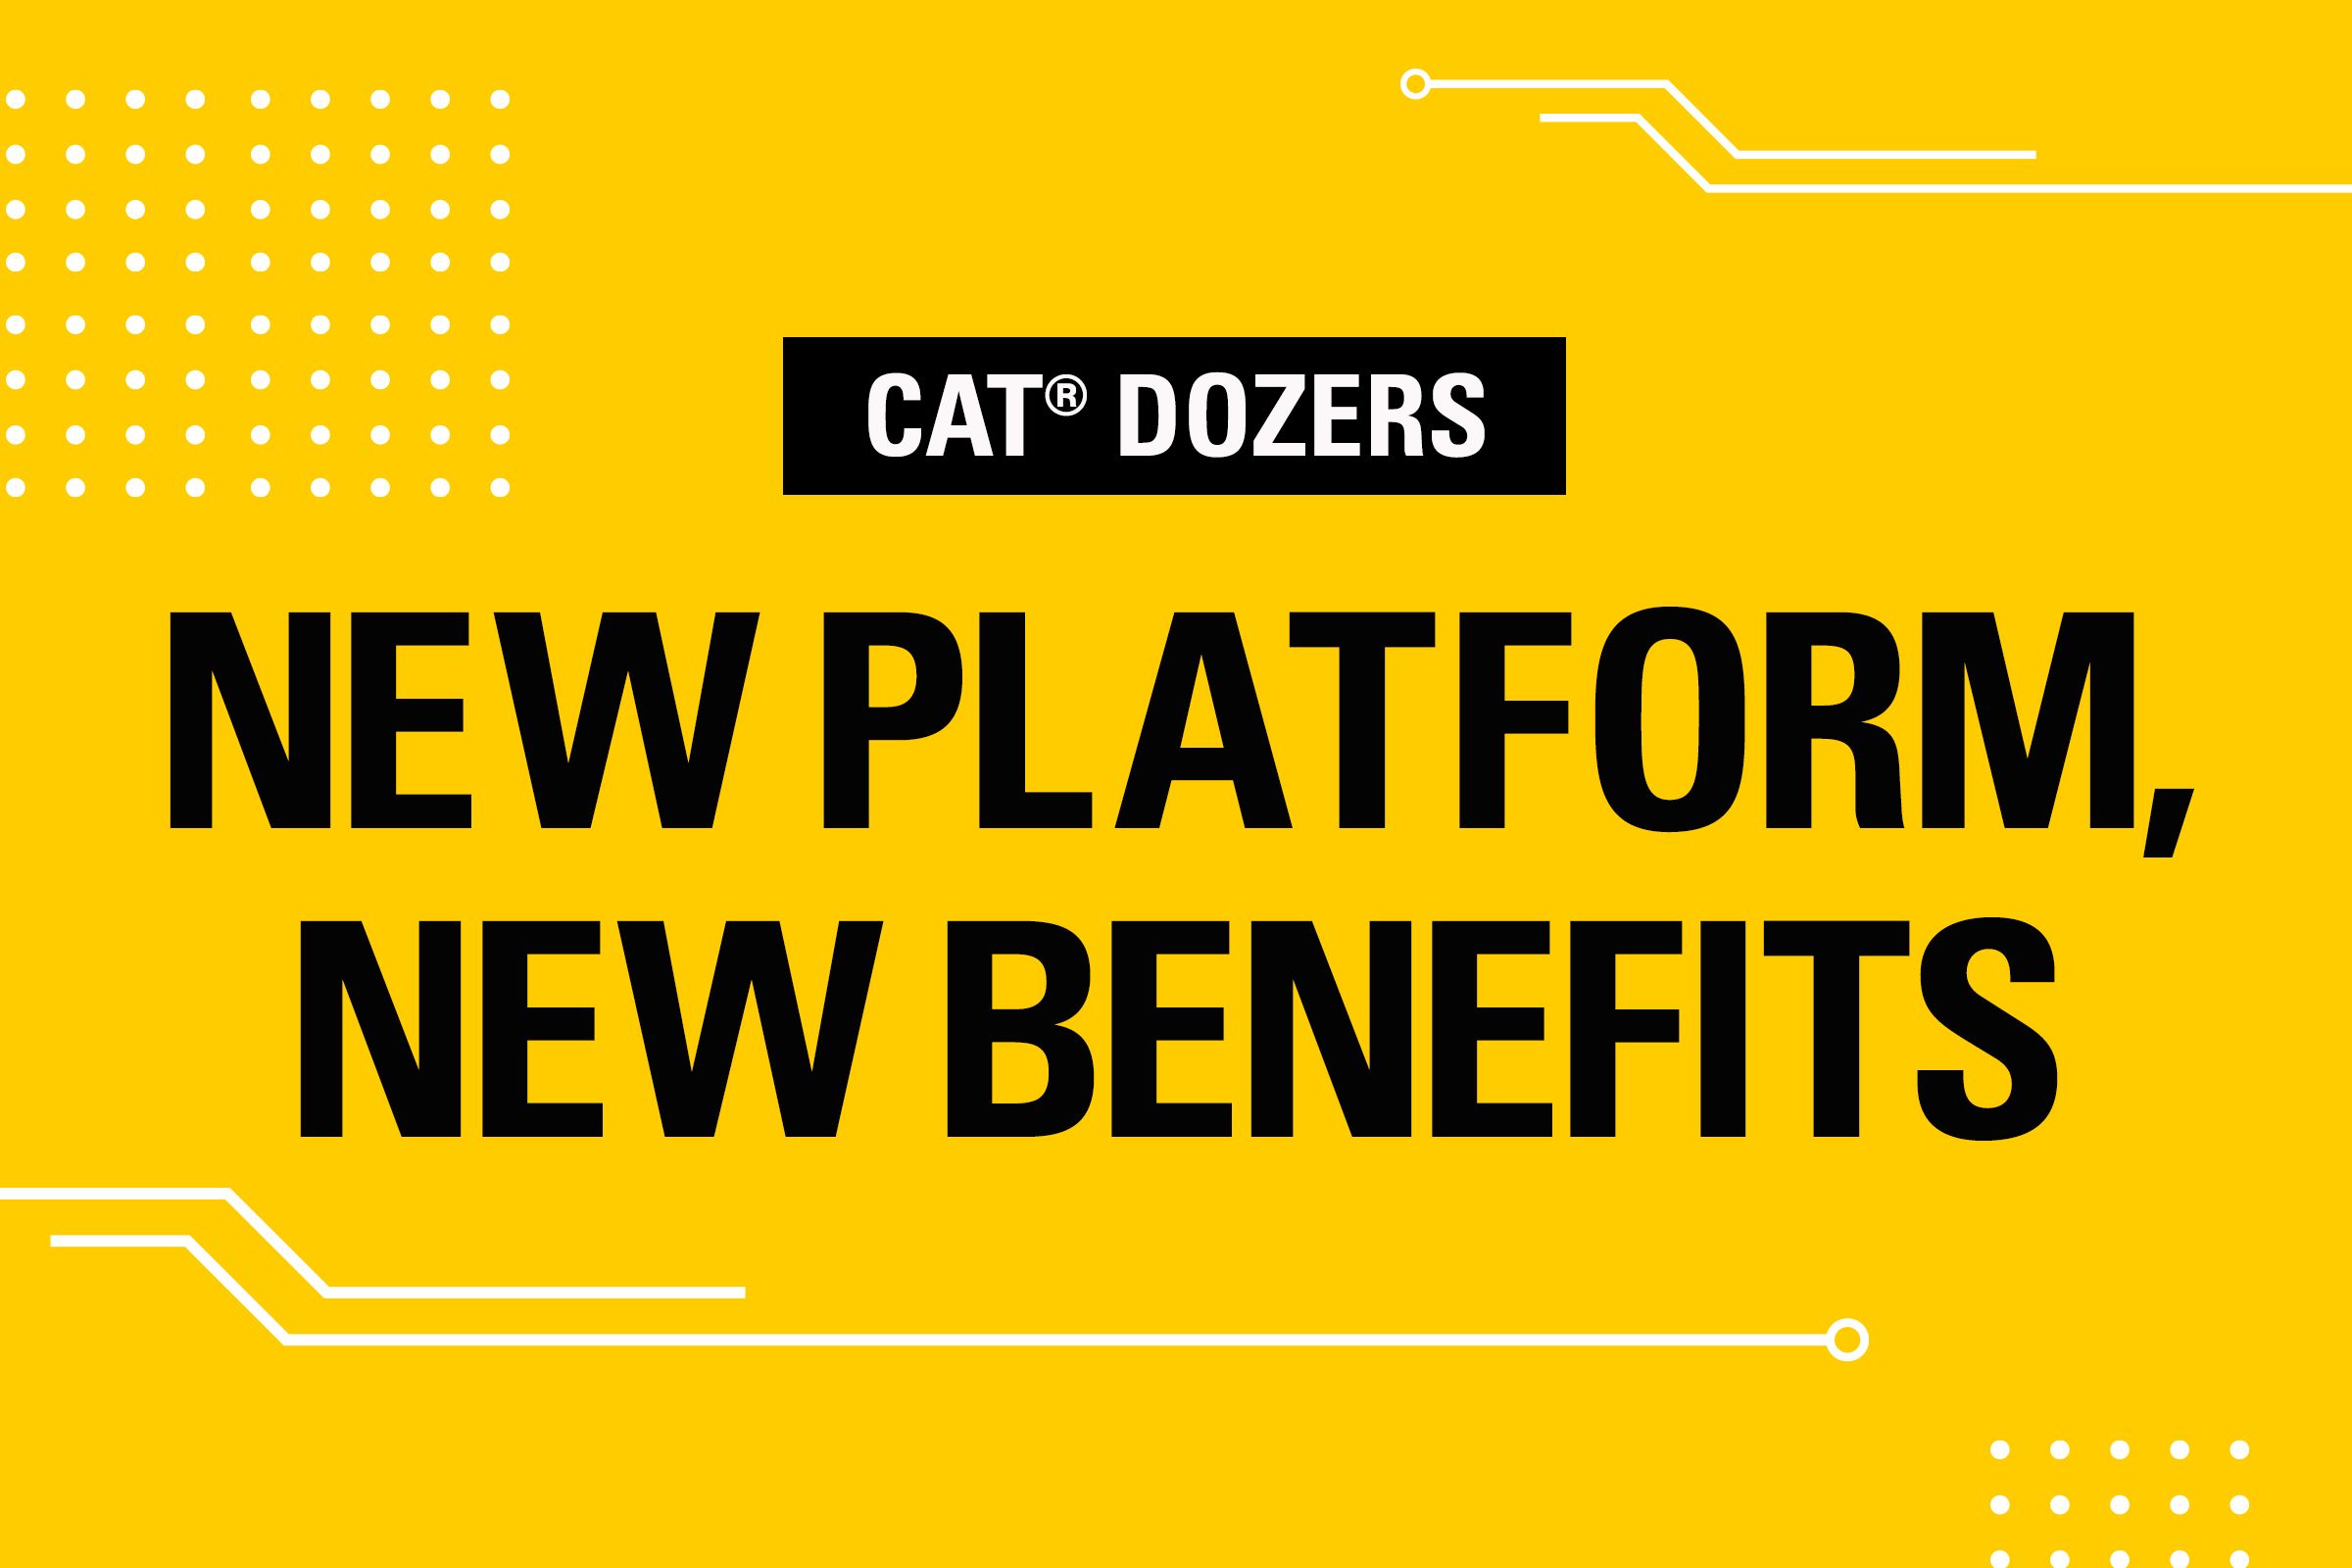 New Platform, New Benefits